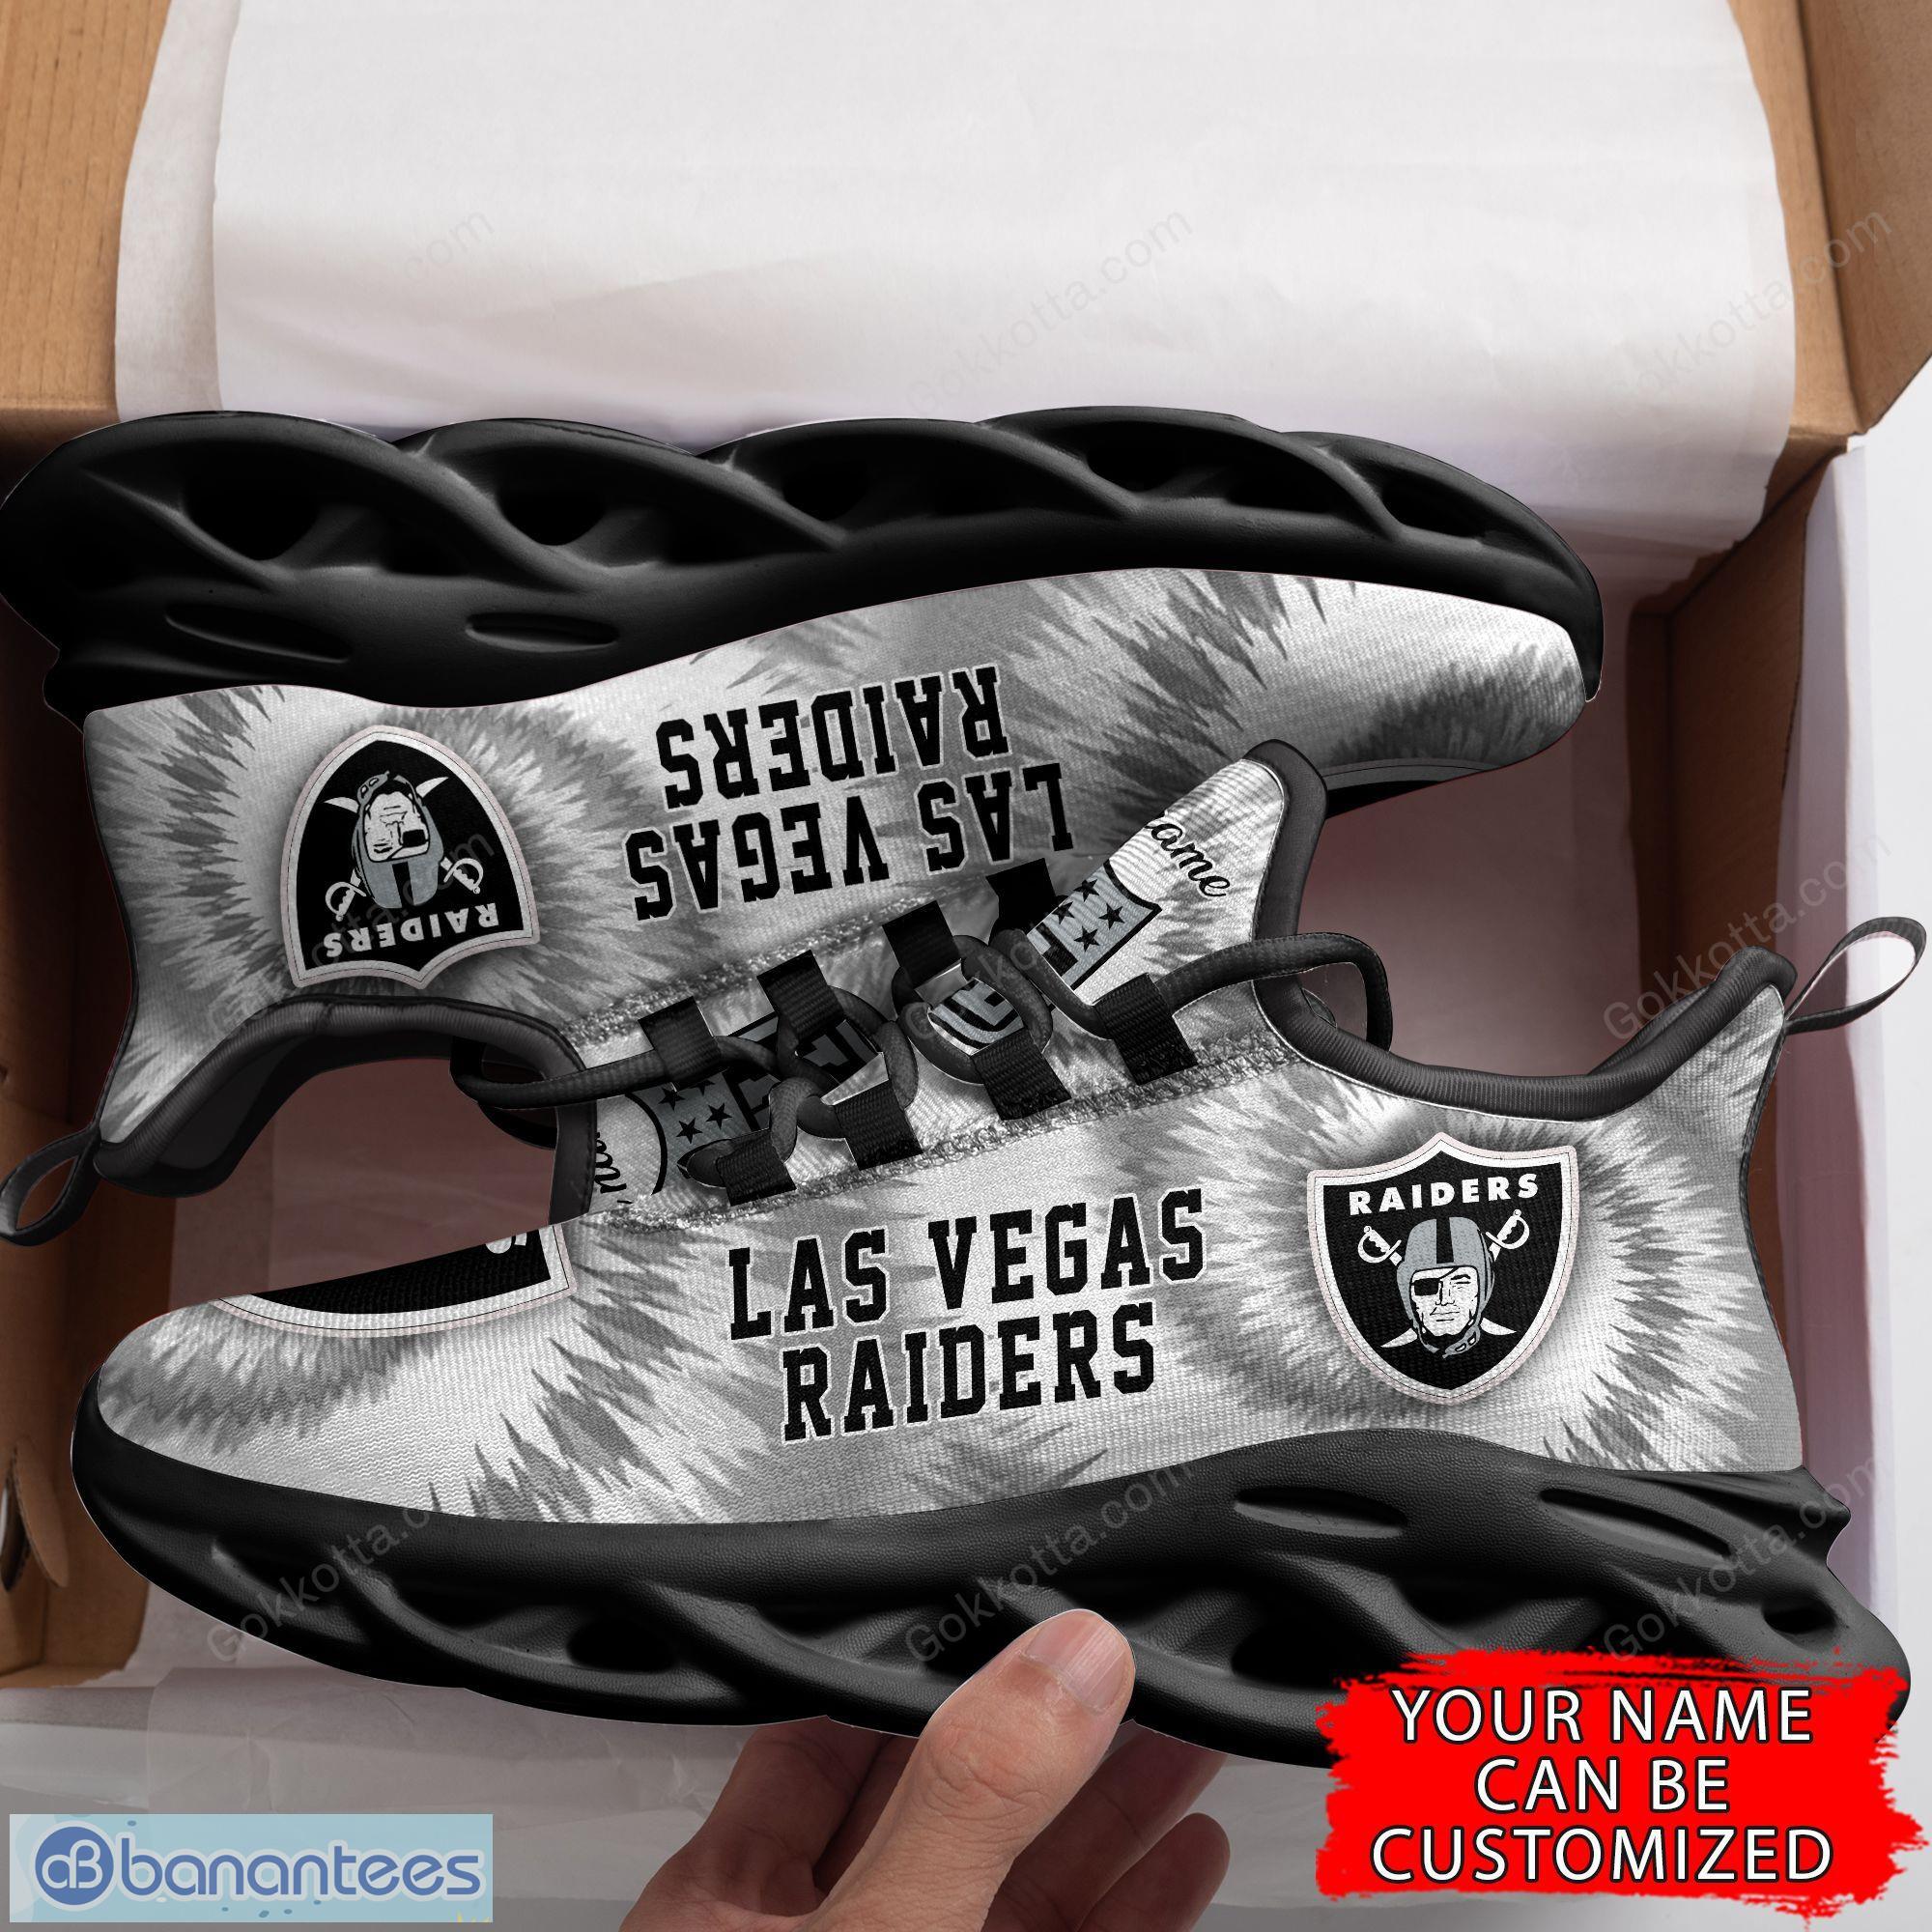 Las Vegas Raiders Max Soul Shoes Sleek Gift For Men And Women Chunky Sneakers Custom Name - MHS2110150305 Las Vegas Raiders Personalized Max Soul shoes_1